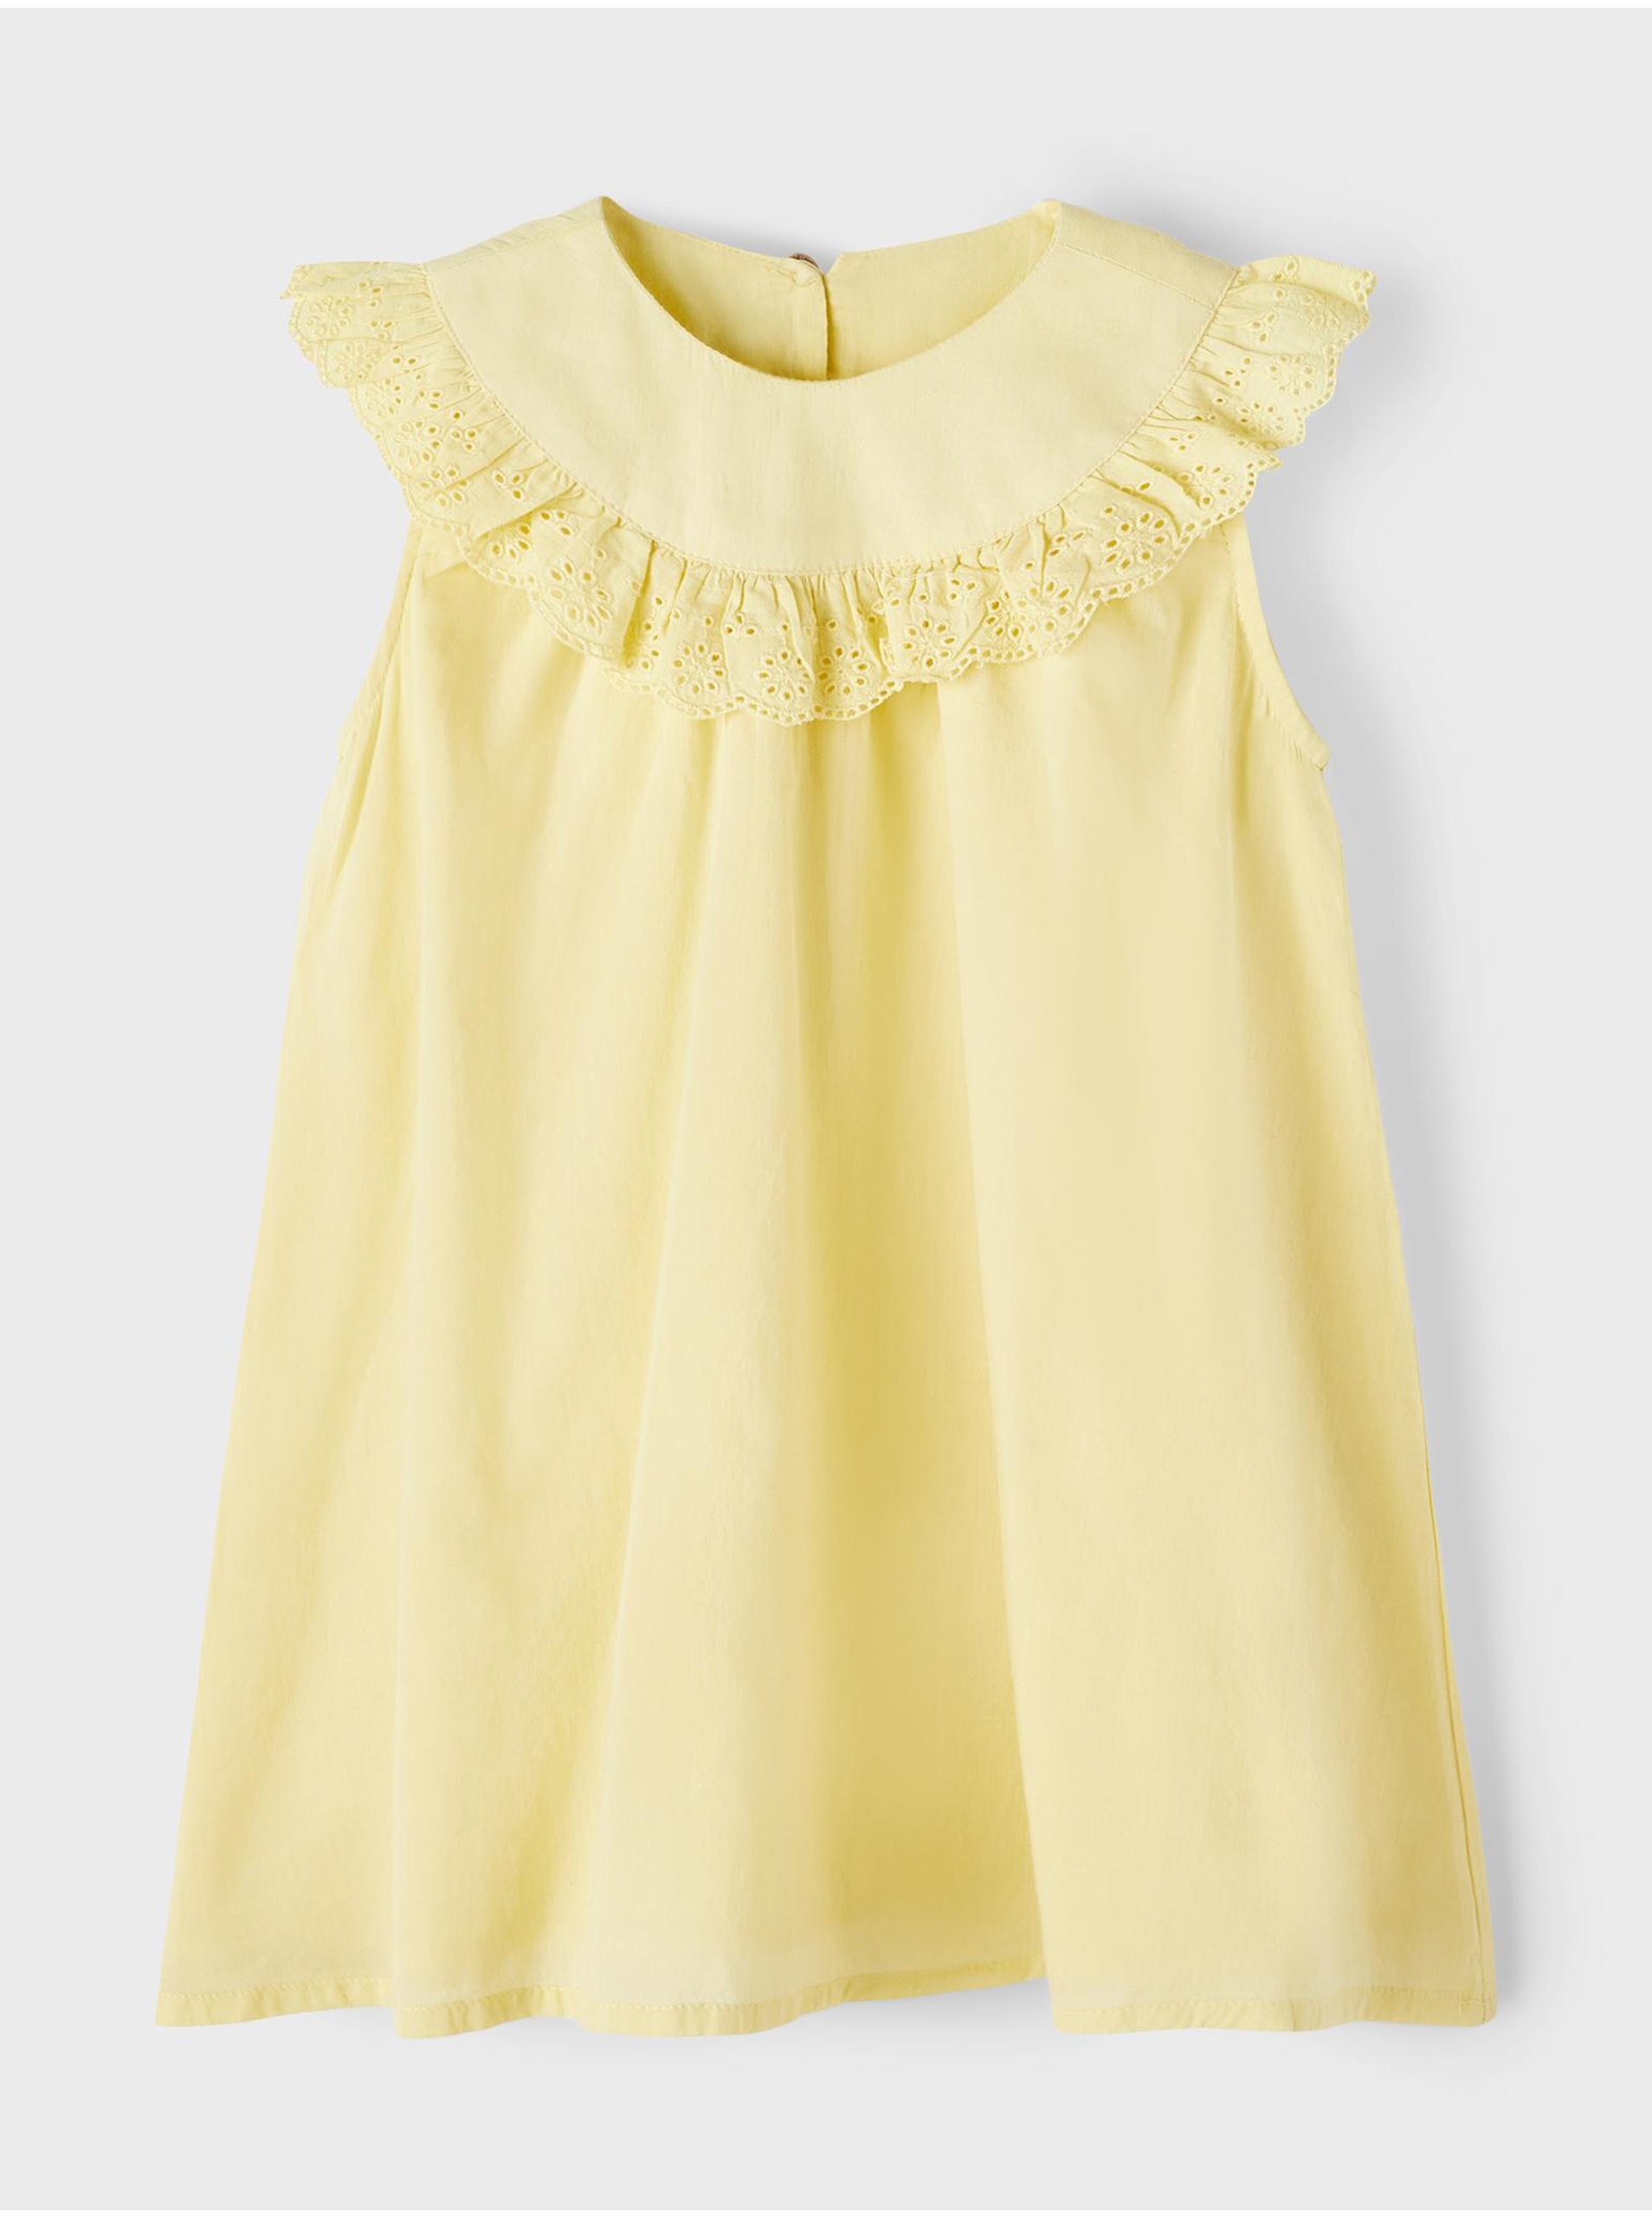 Lacno Svetlo žlté dievčenské šaty name it Fetulle